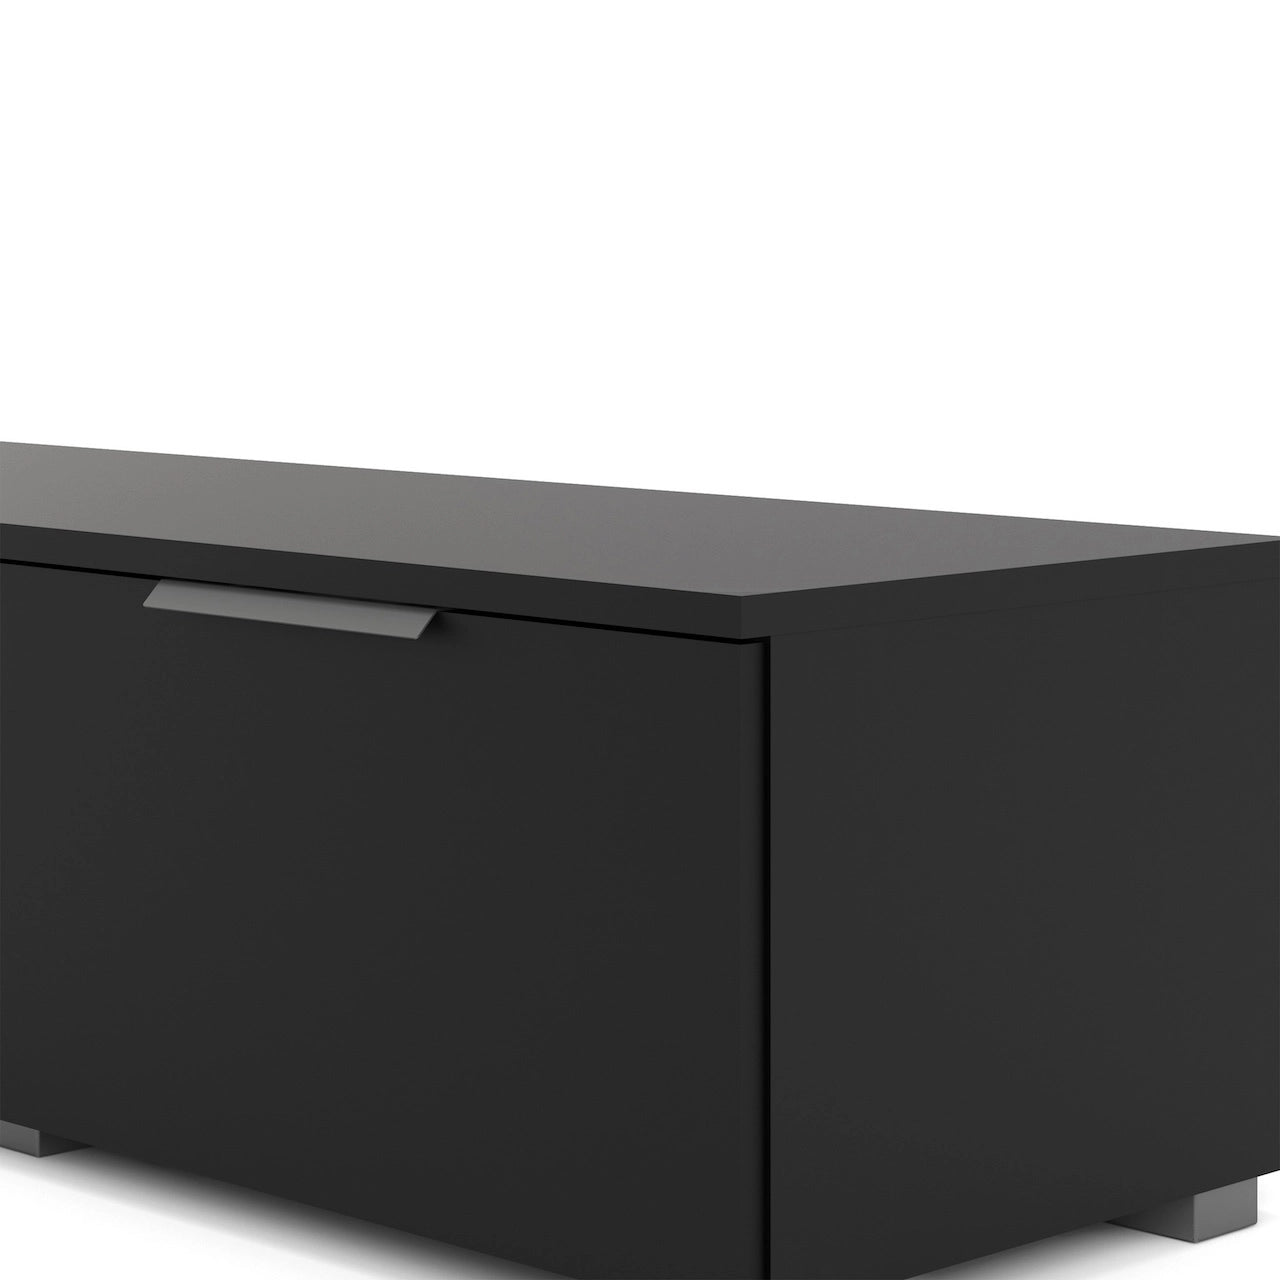 Furniture To Go Match TV Unit 2 Drawers 2 Shelf in Black